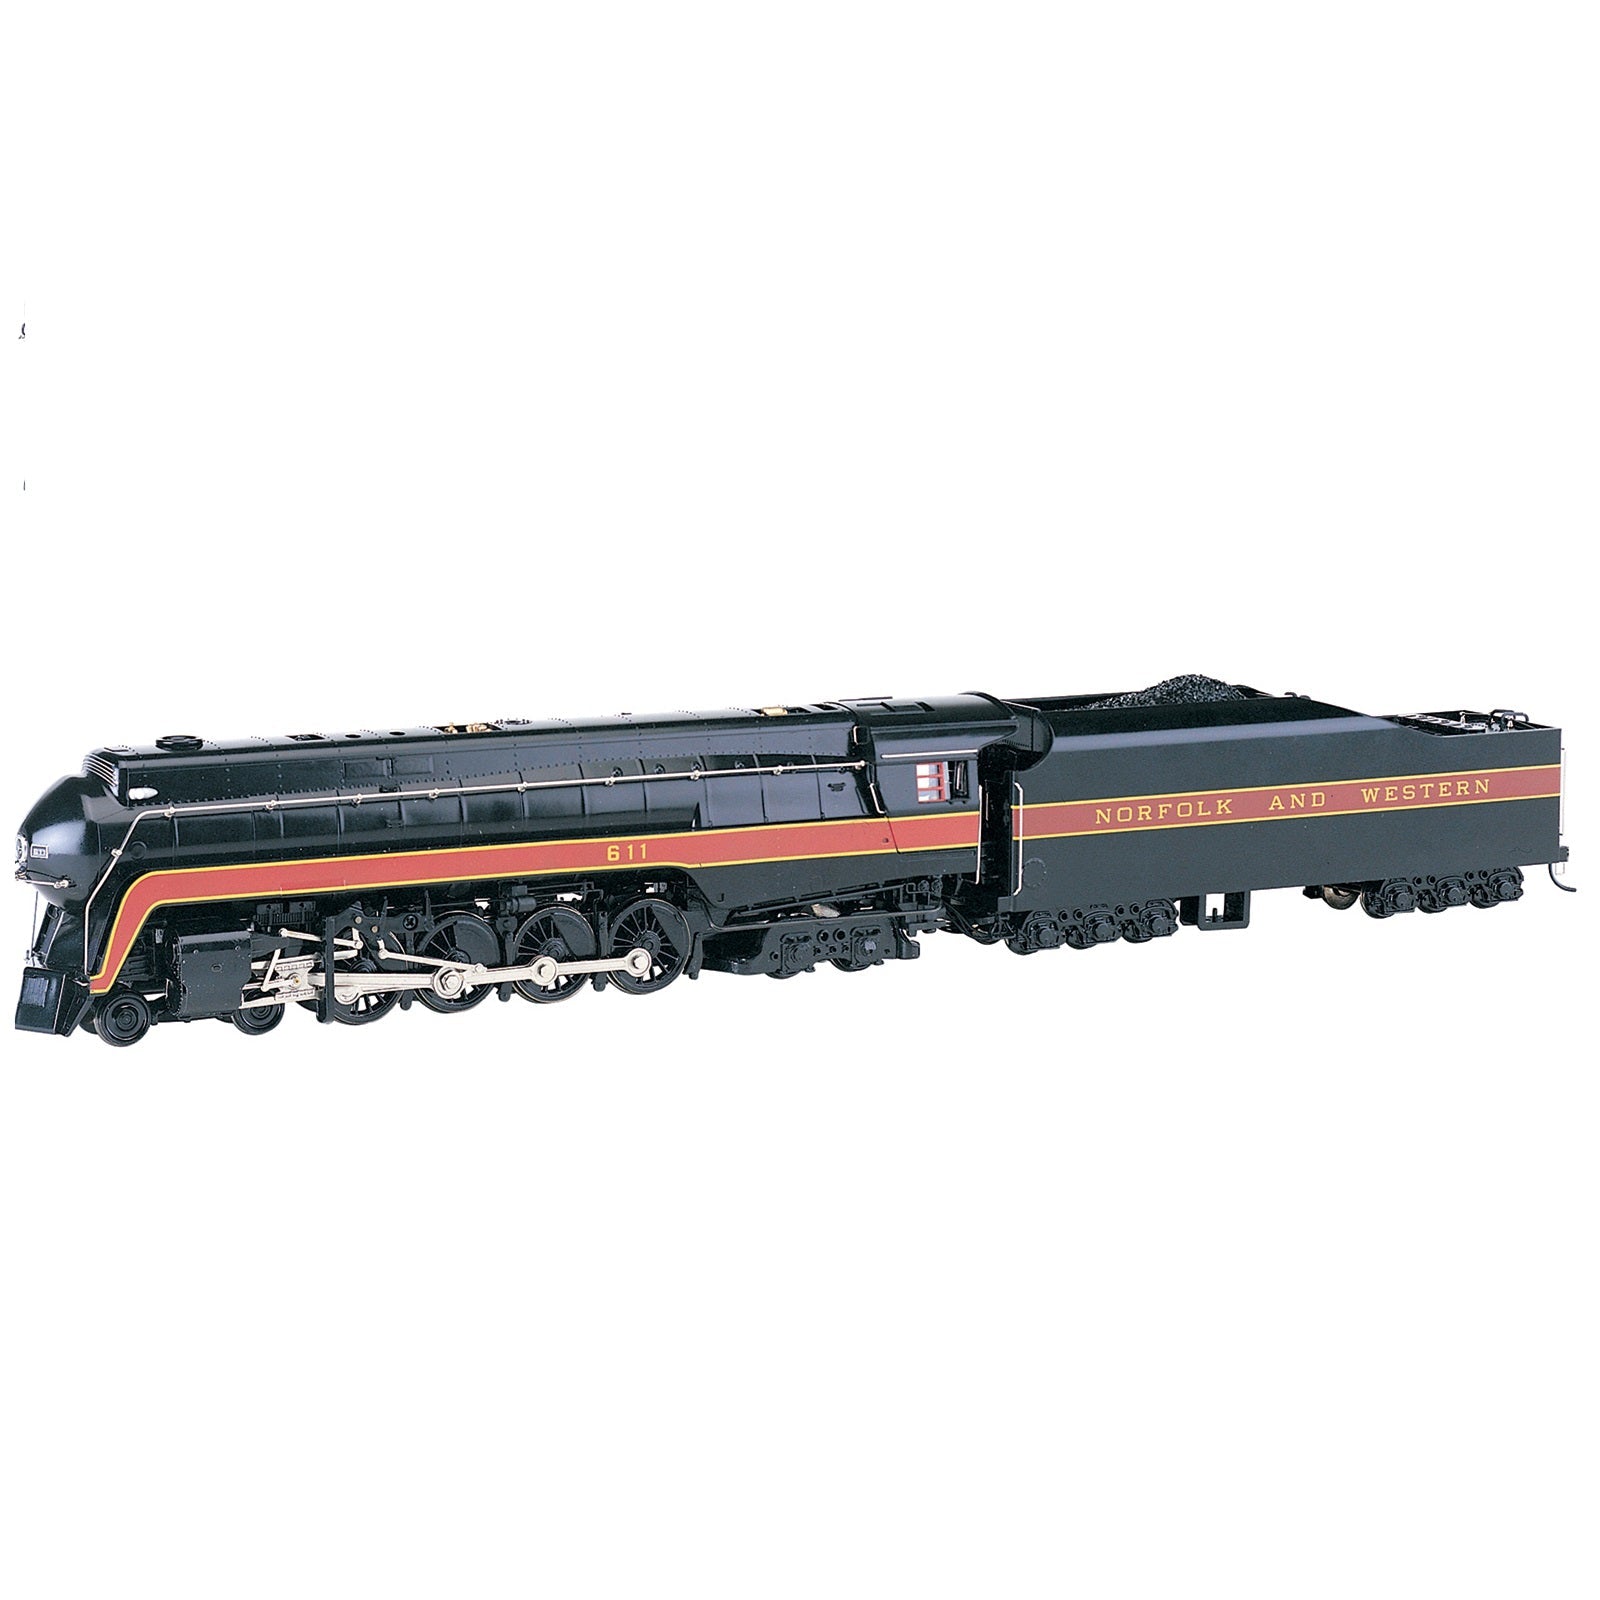 Bachmann HO Class J 4 - 8 - 4 & Tender Locomotive, Norfolk & Western, No. 613, Sound Value